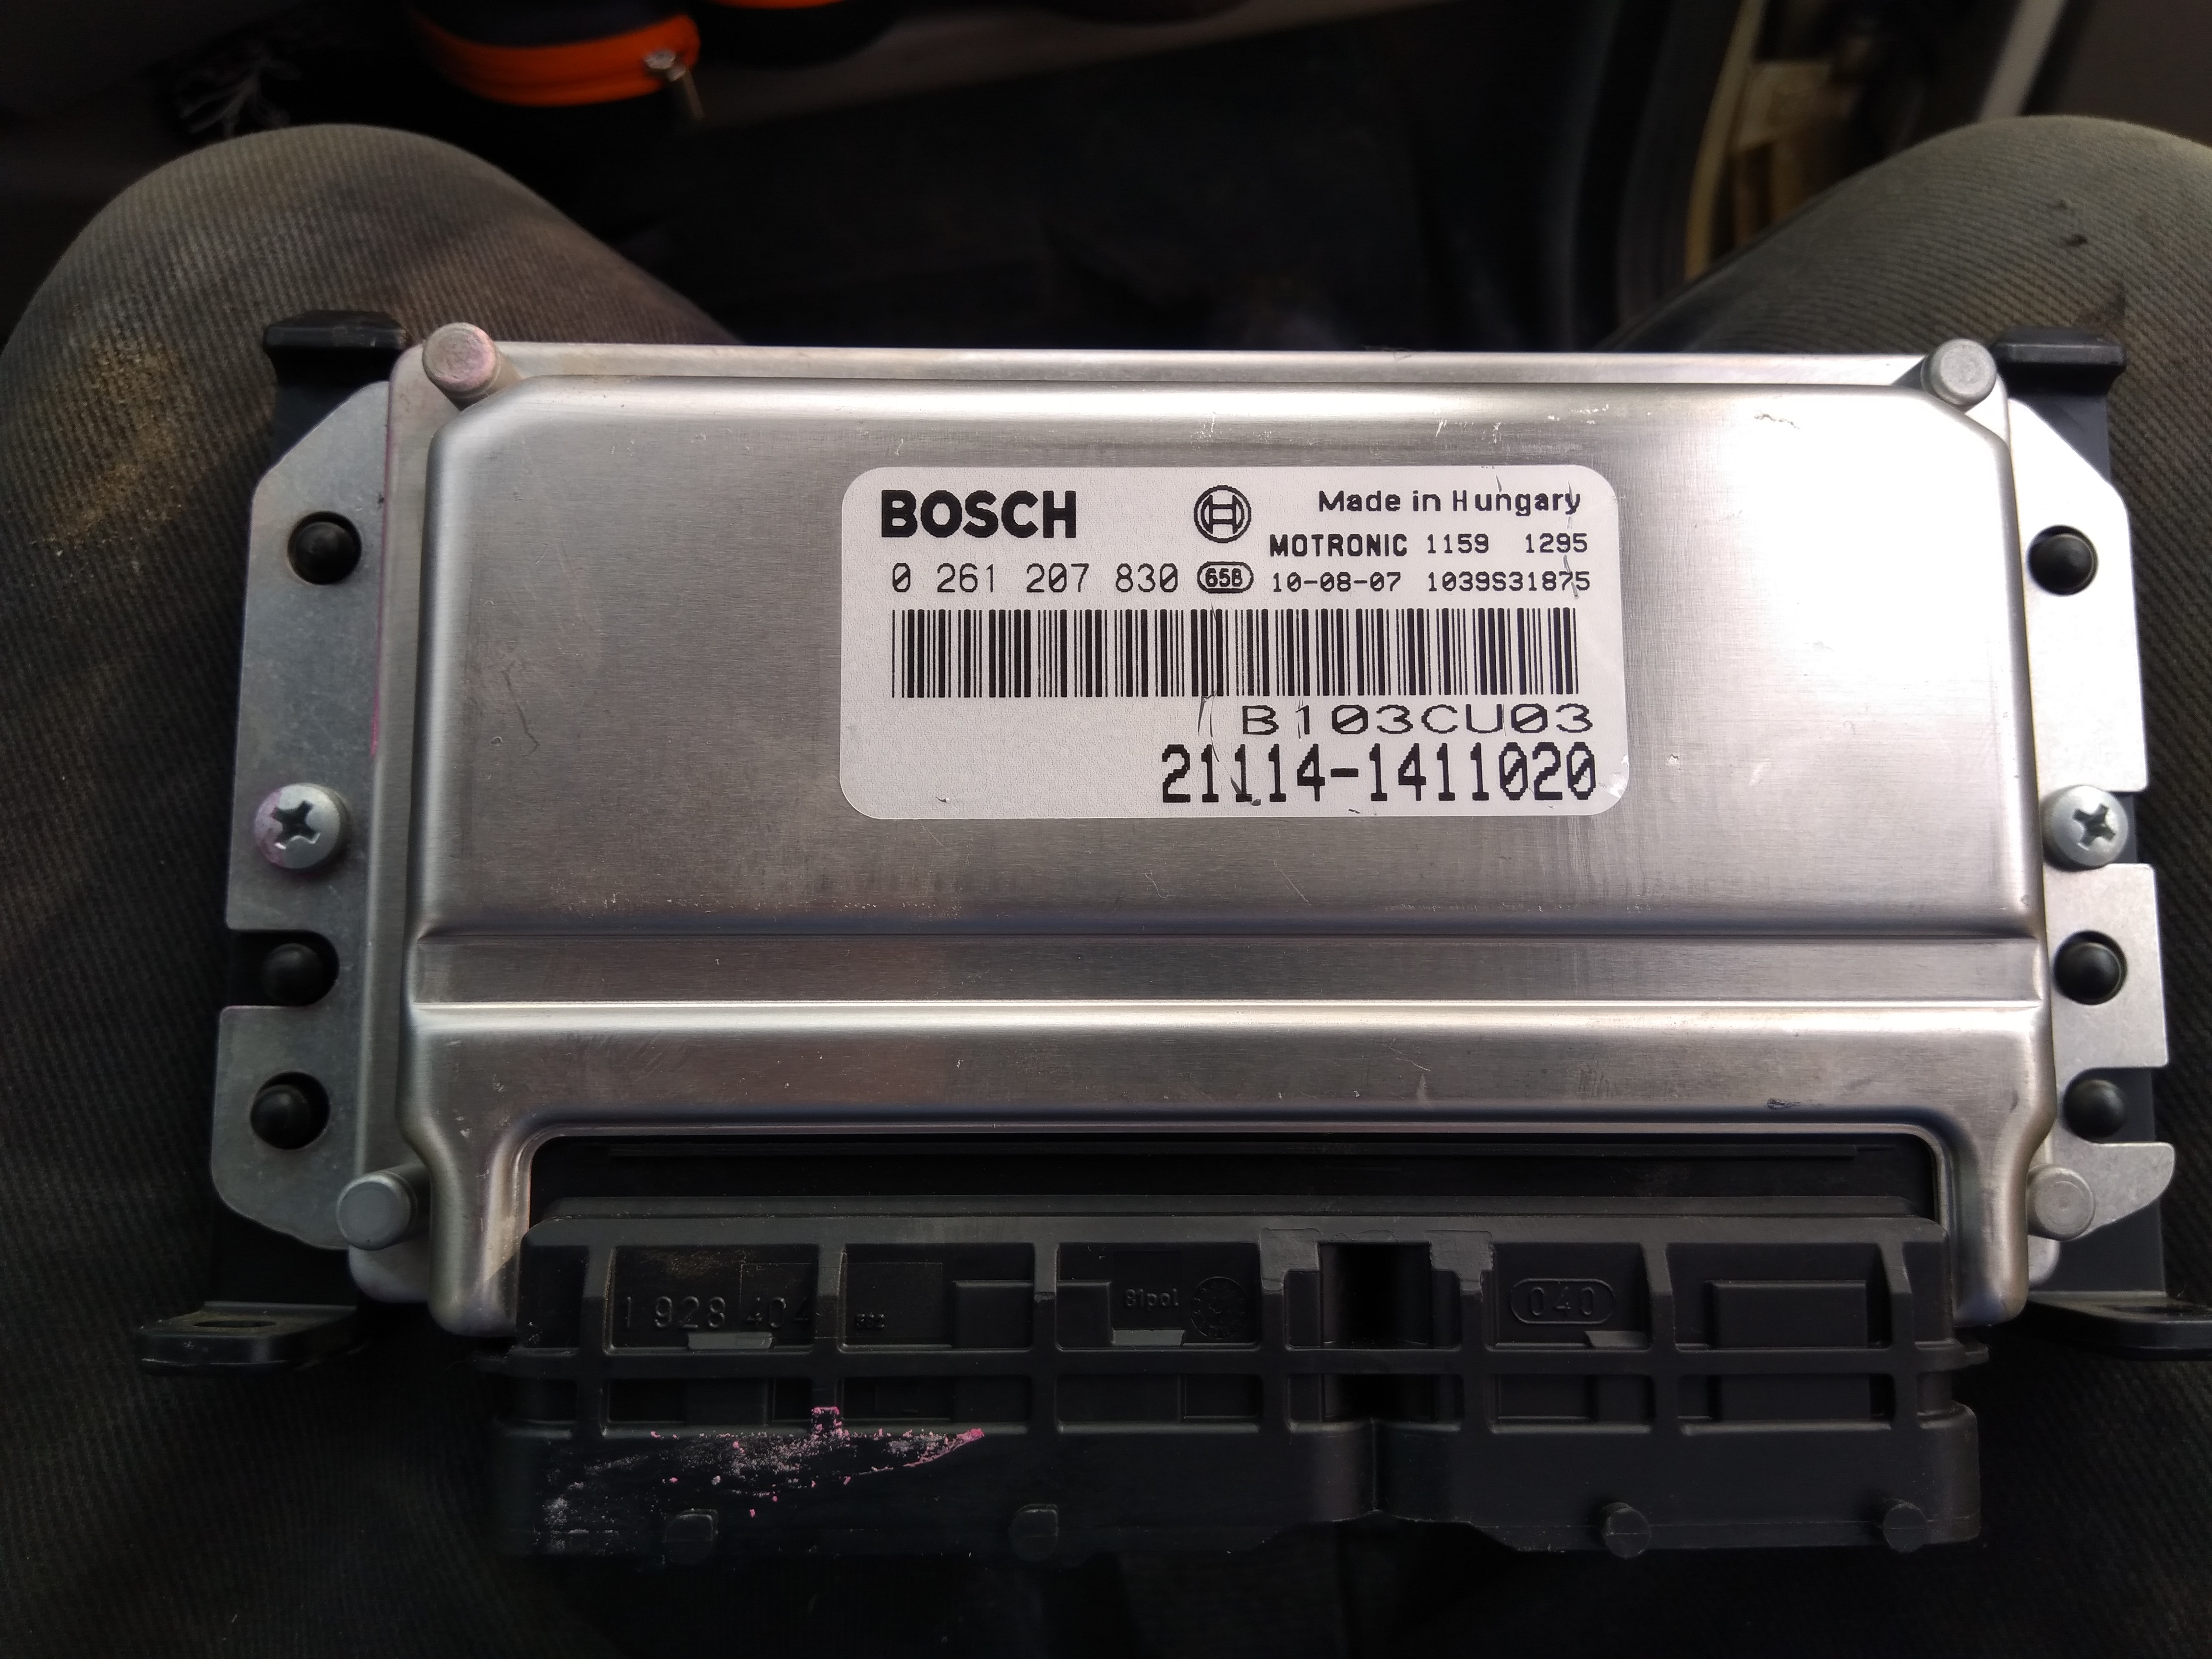 Bosch 7.0. Bosch 21114-1411020. ЭБУ бош 21114-1411020. Bosch ЭБУ 0 261. ЭБУ бош Калина 1.6 8.